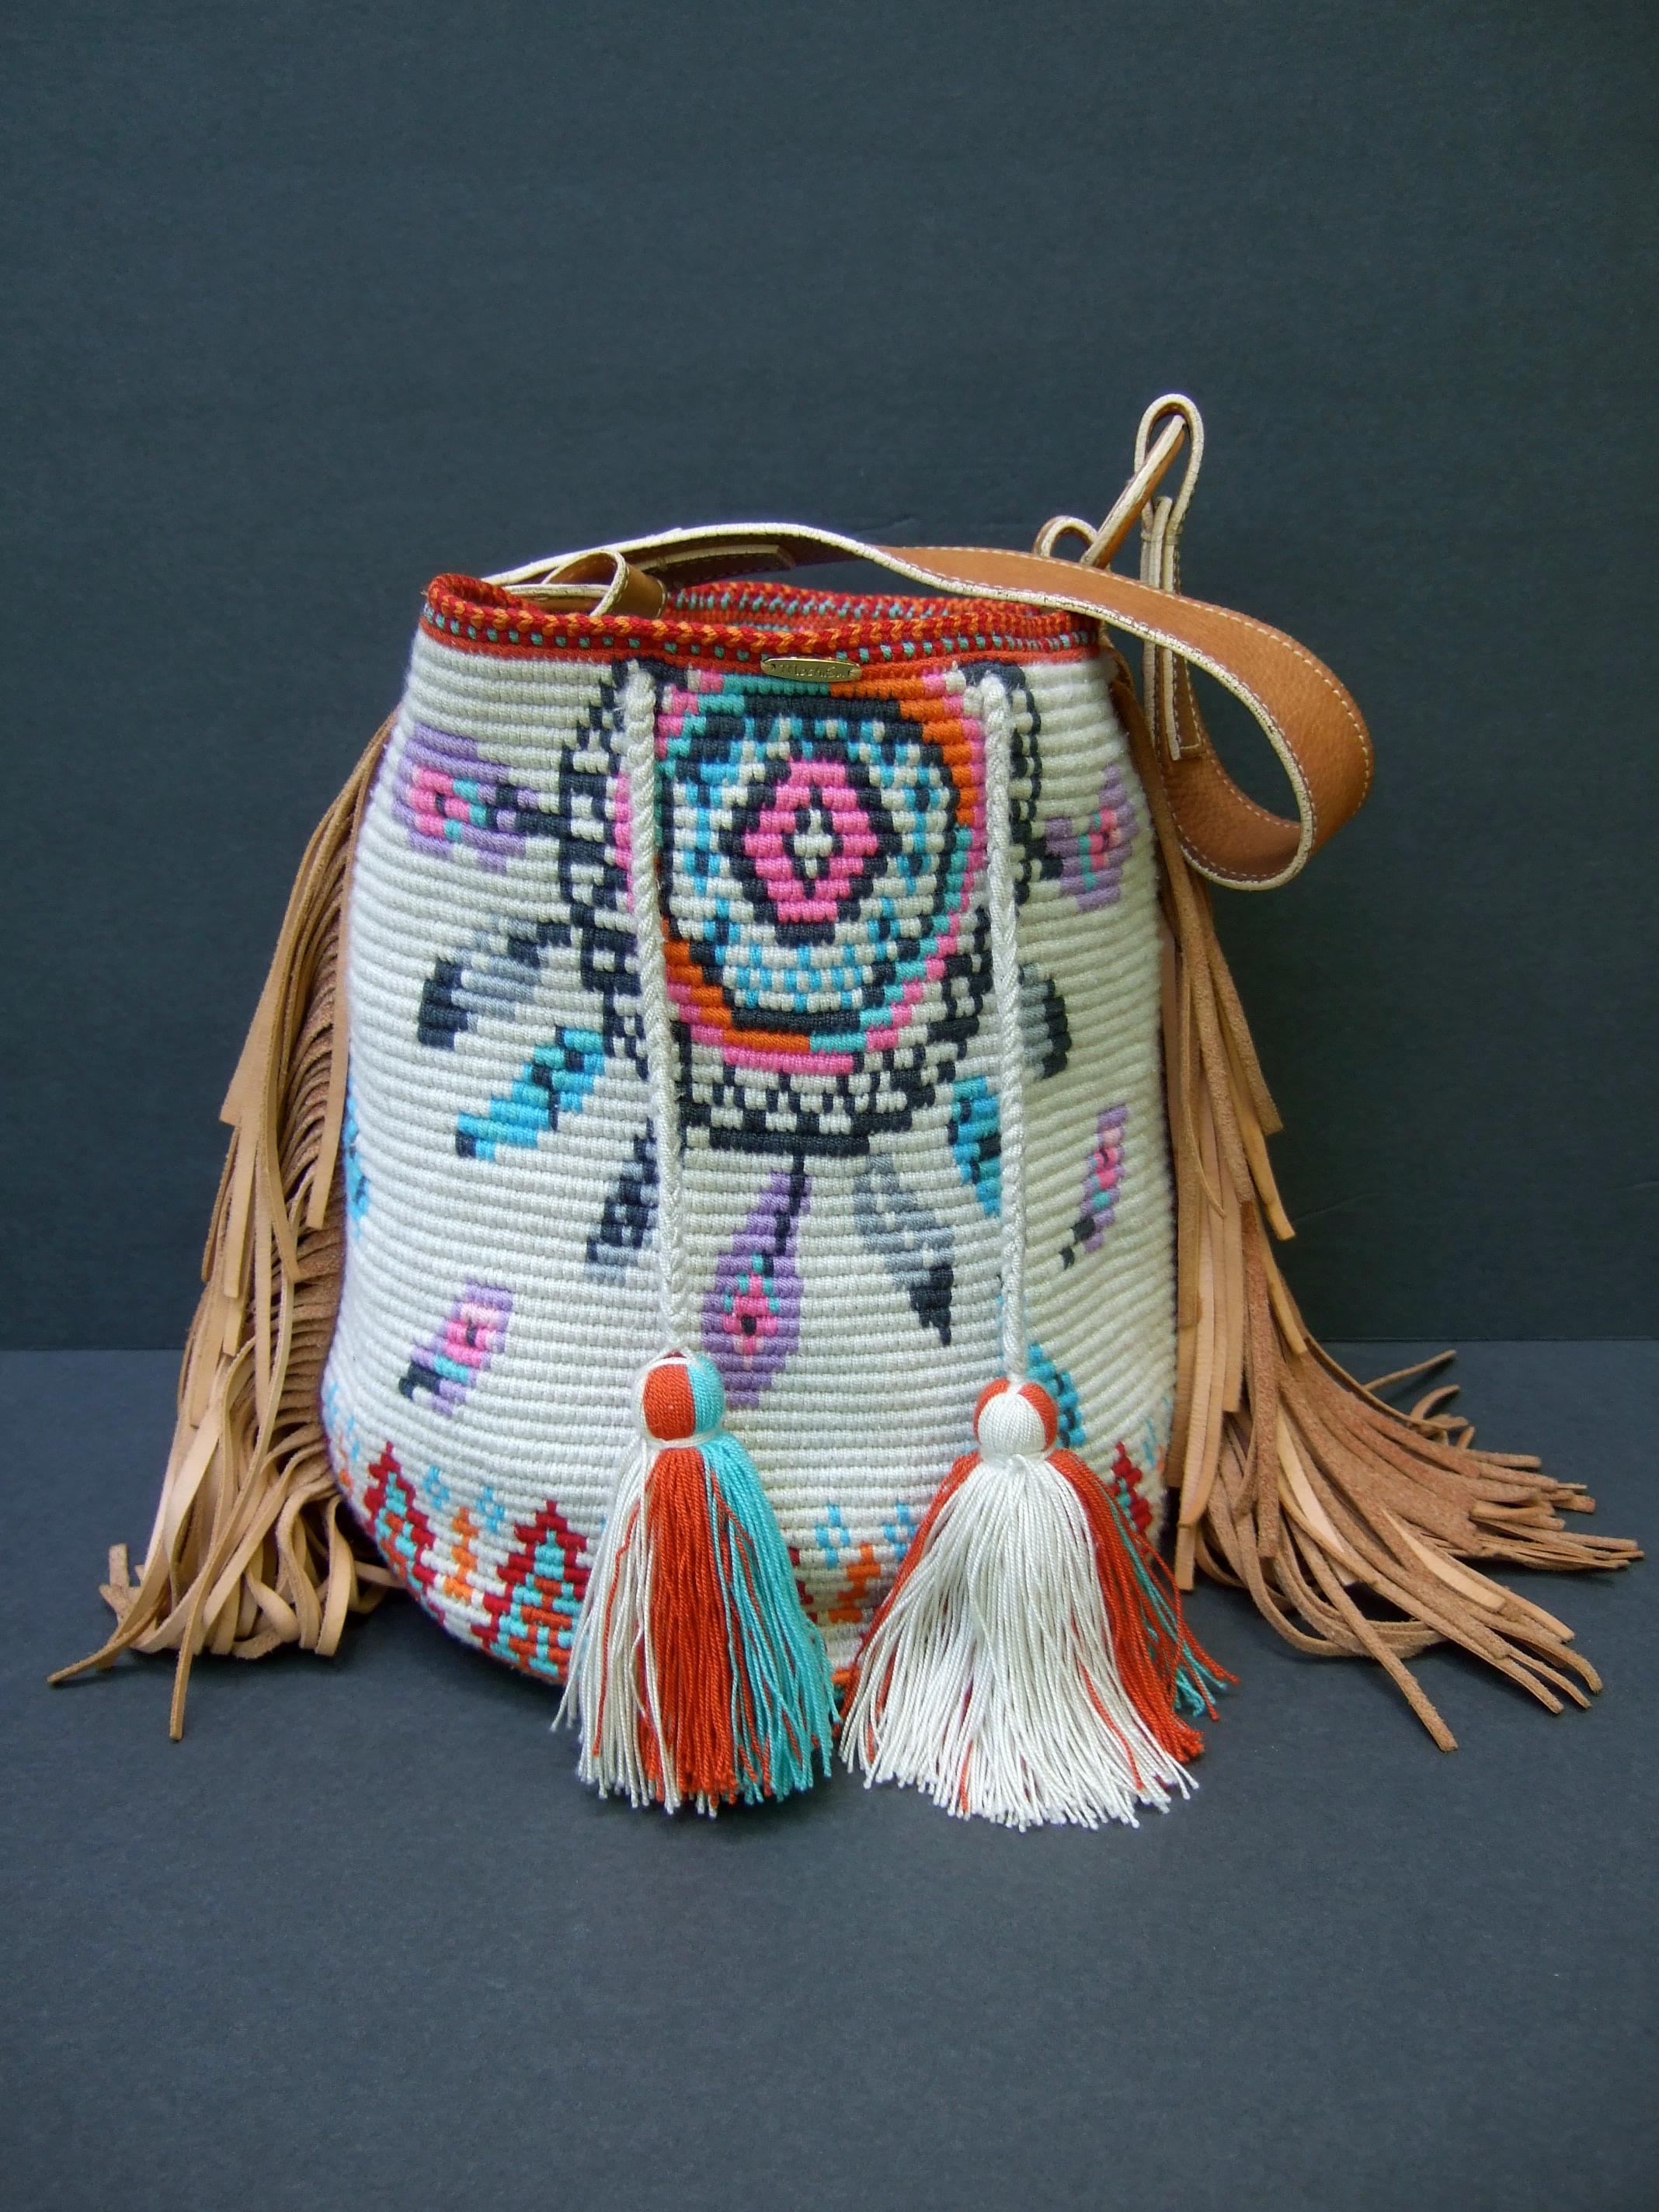  Handmade Woven Wool Knit Artisan Bucket Shoulder Bag c 1990s For Sale 7